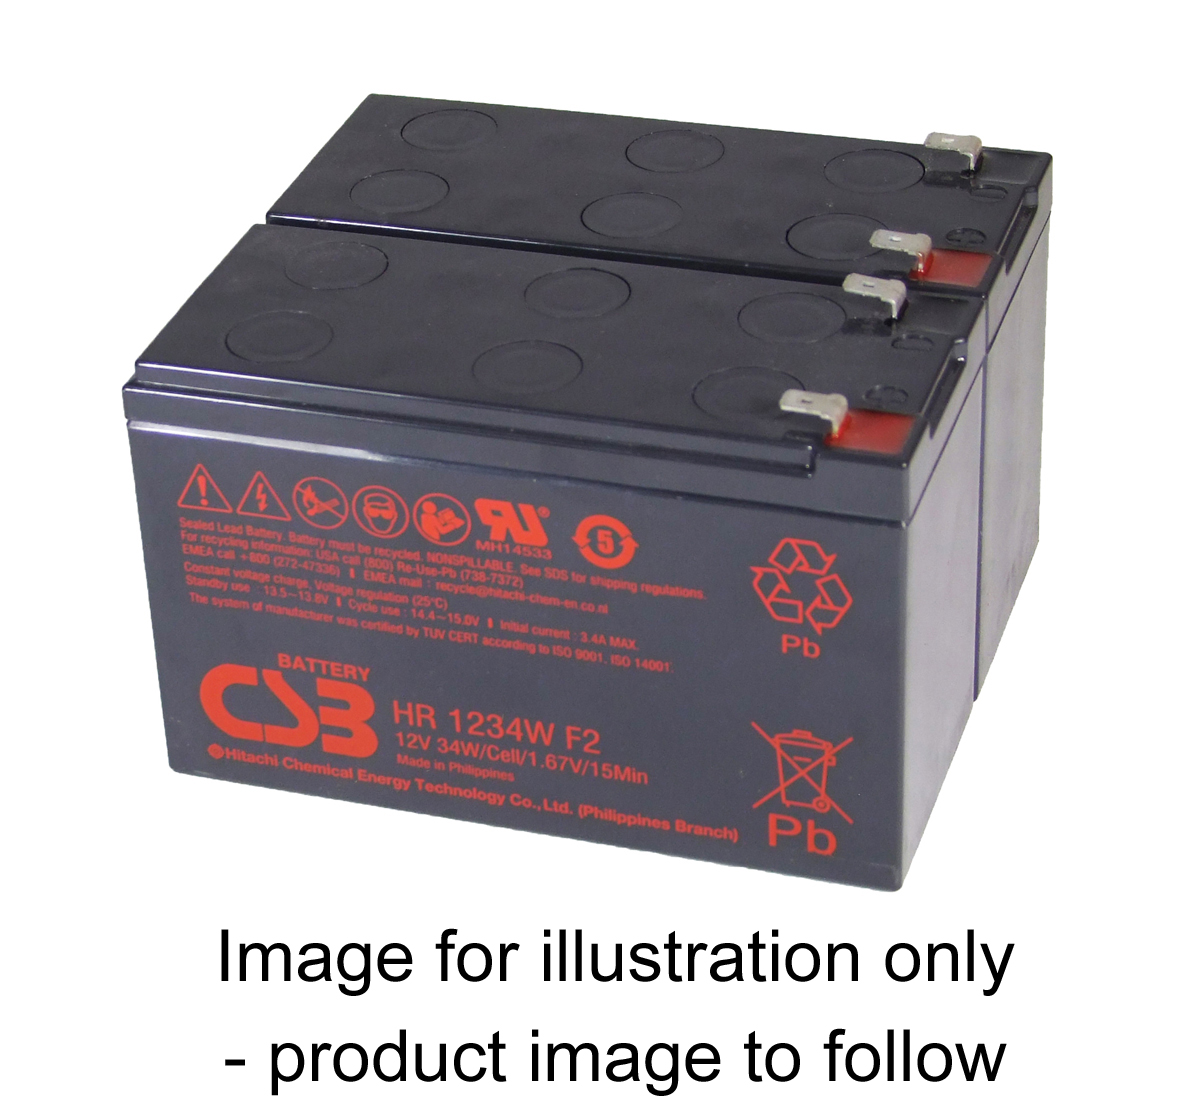 MDSV205 UPS Battery Kit - Replaces APC RBCV205